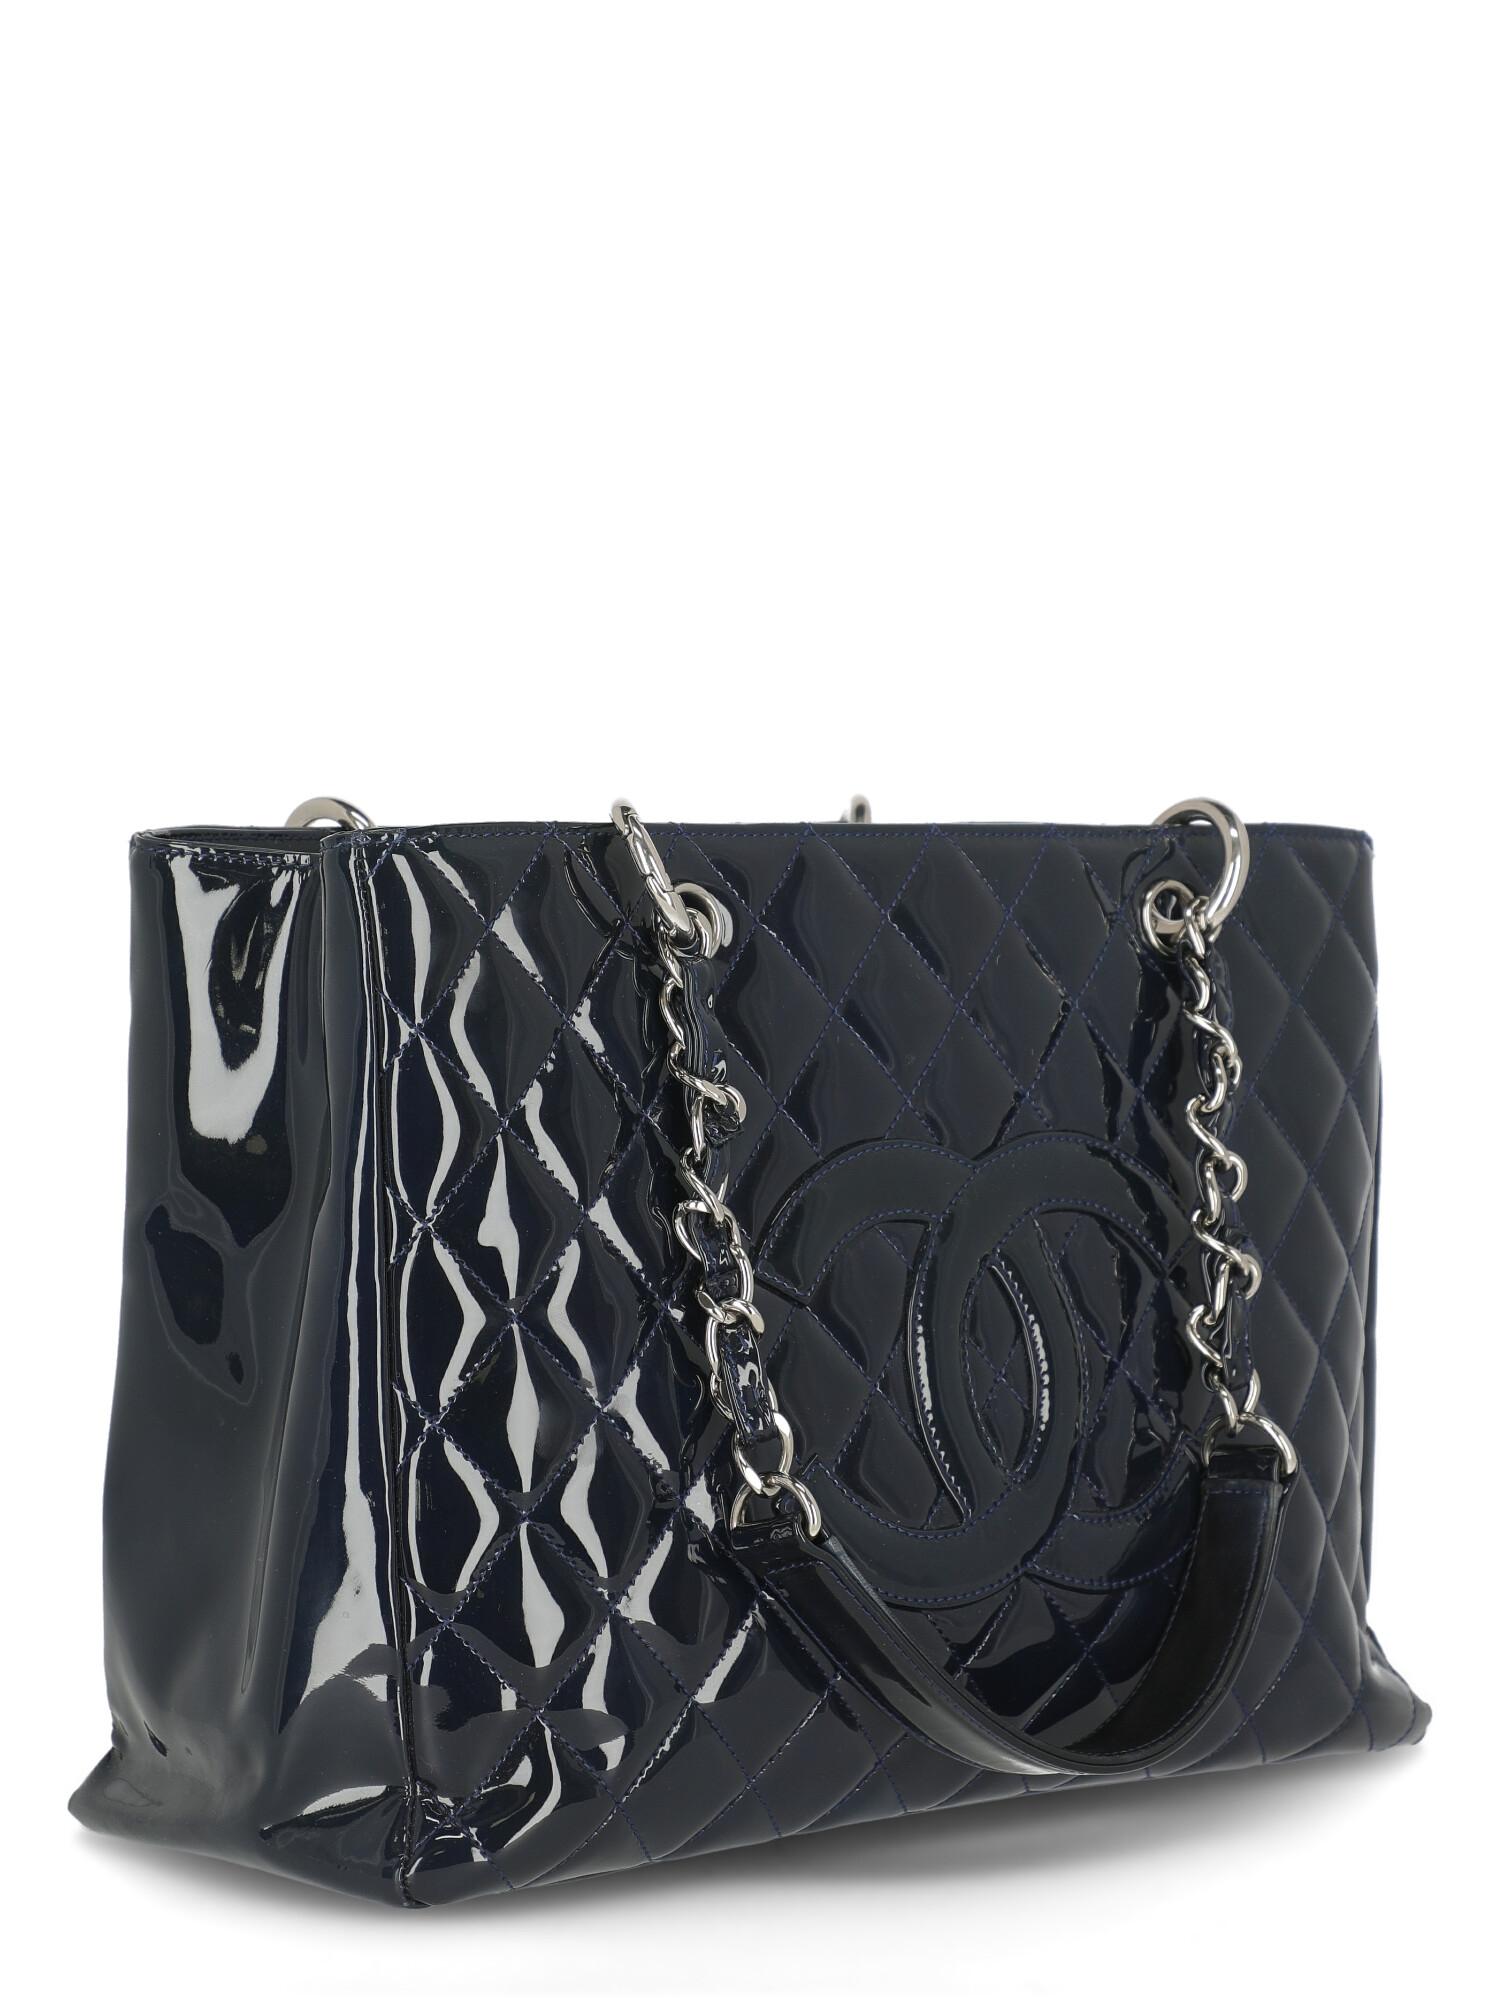 Black Chanel Women's Handbag Grand Shopping Tote Navy Leather